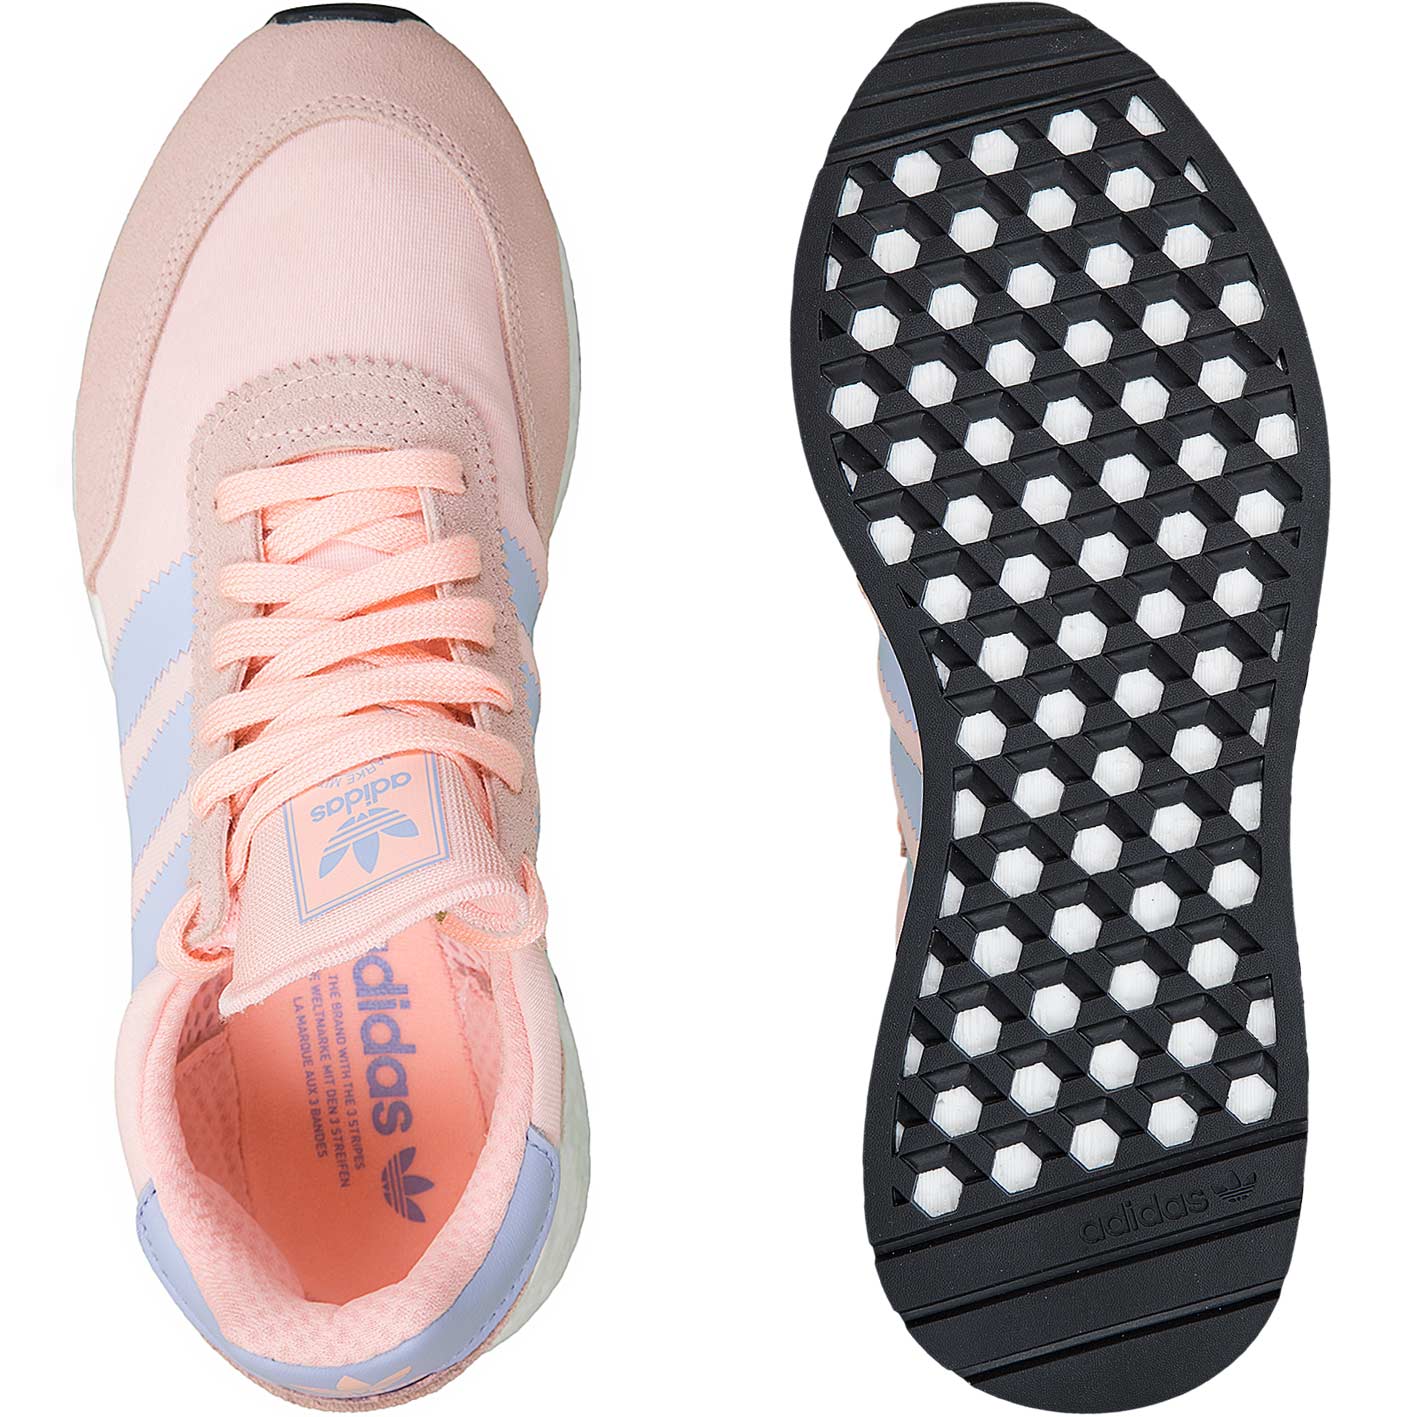 ☆ Adidas Originals Damen Sneaker I-5923 orange/blau - hier bestellen!